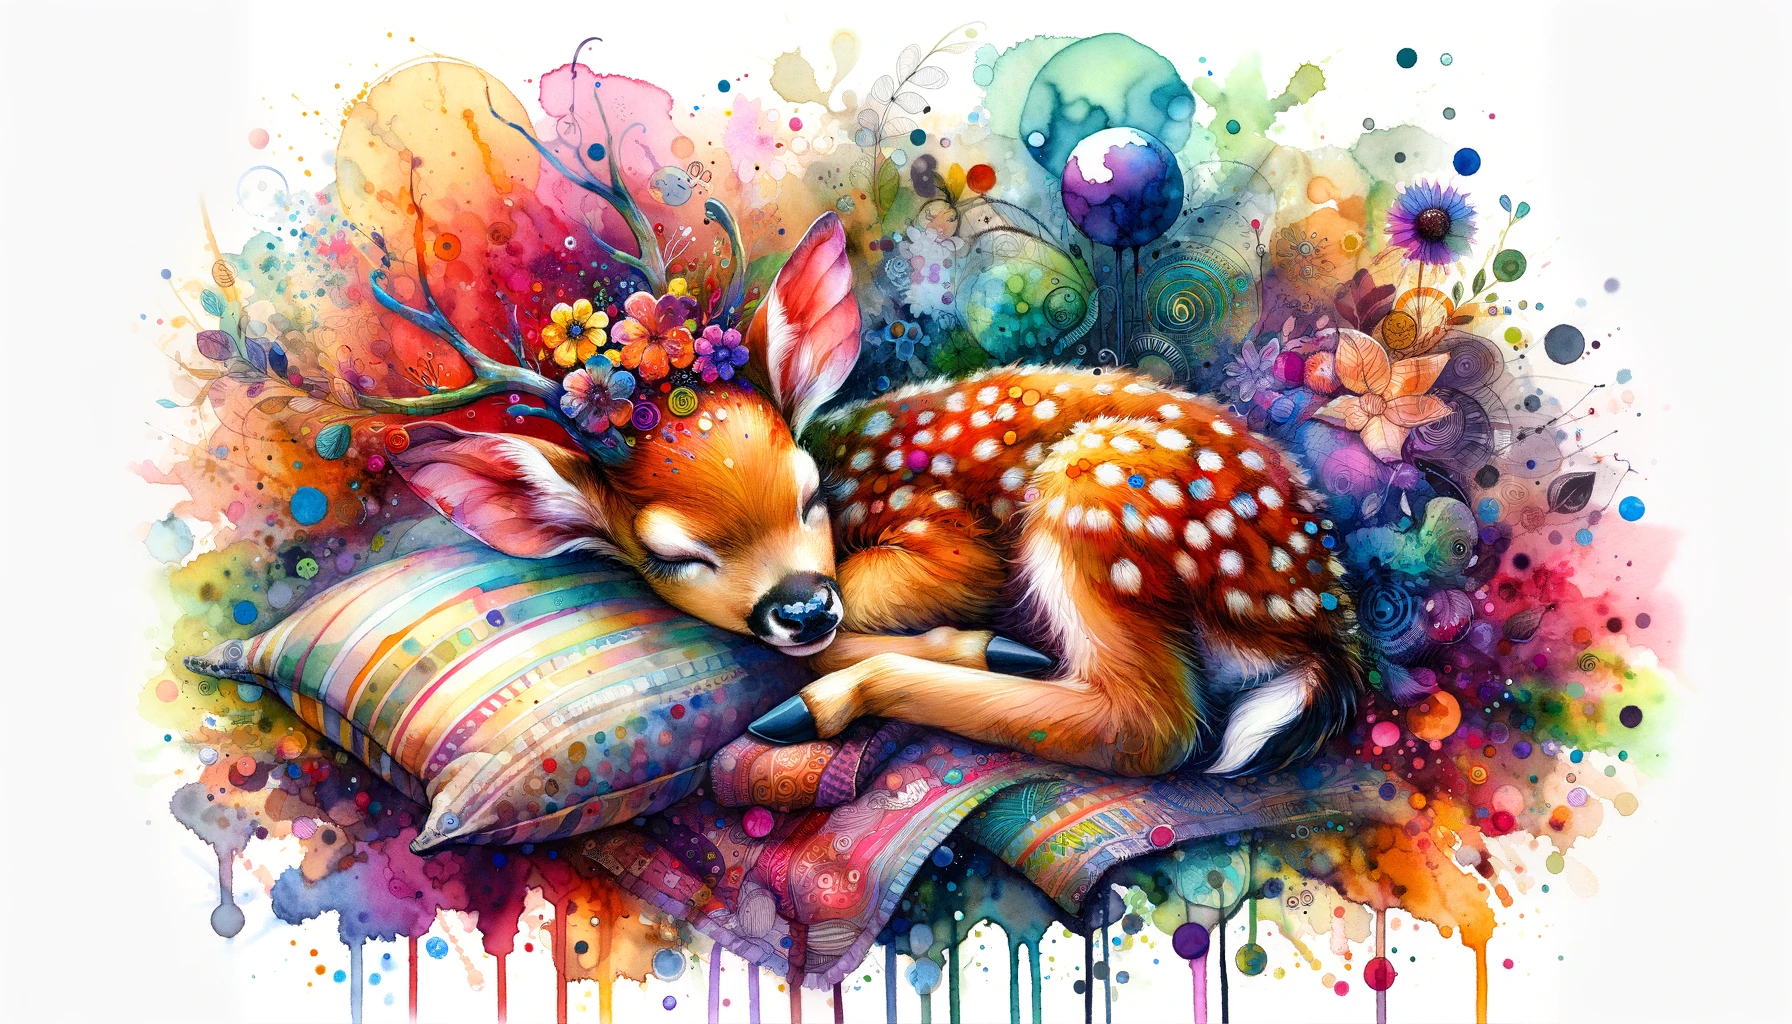 Rainbow Deer Sleeping on a Pillow Painting